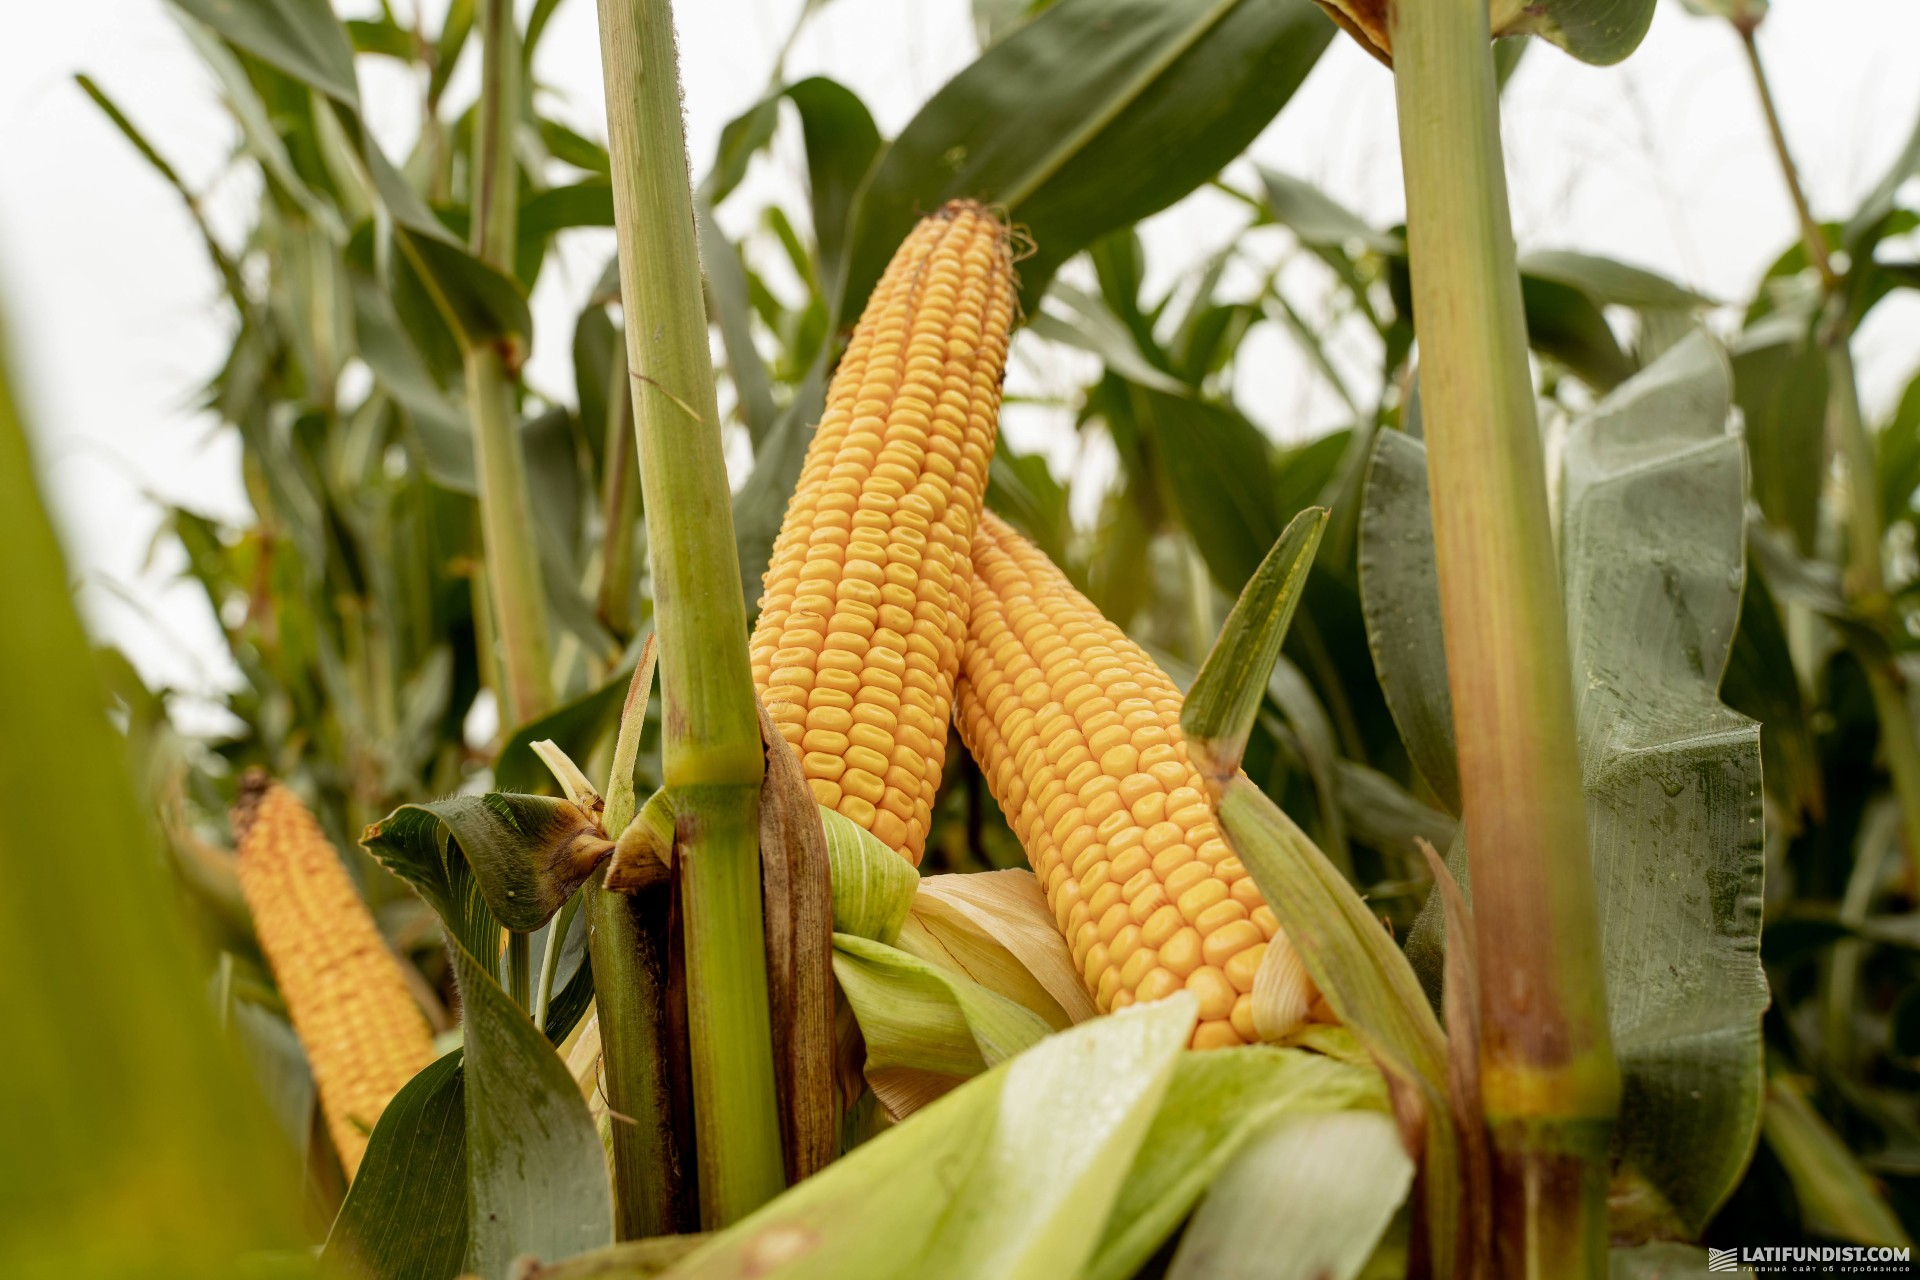 Corn field in Ukraine